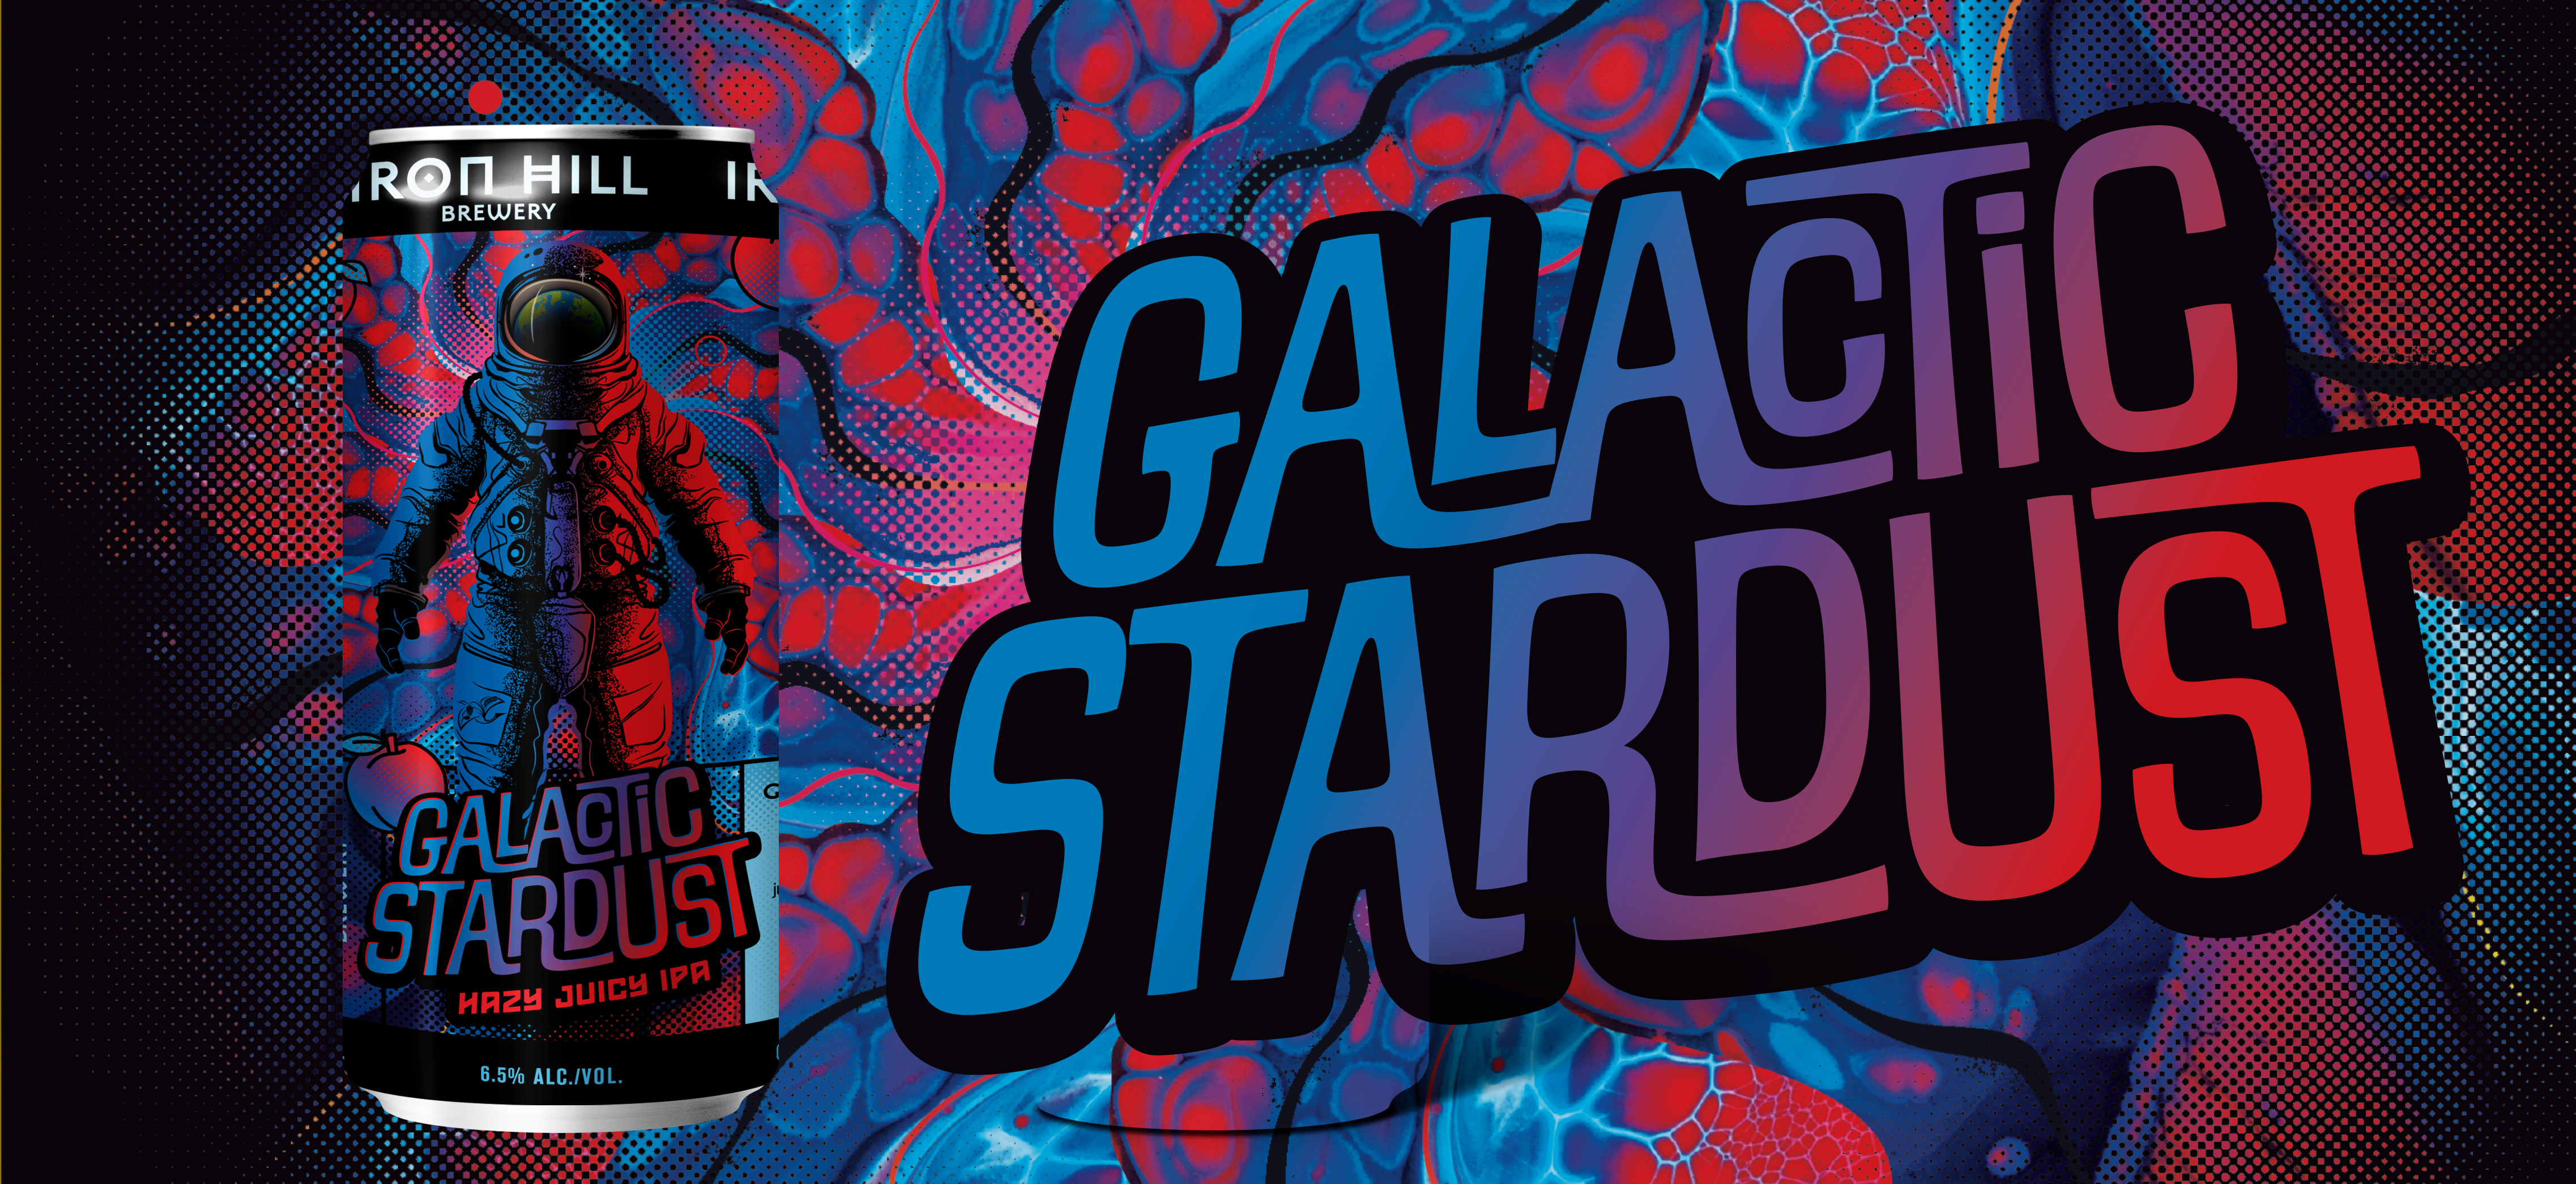 Galactic Stardust